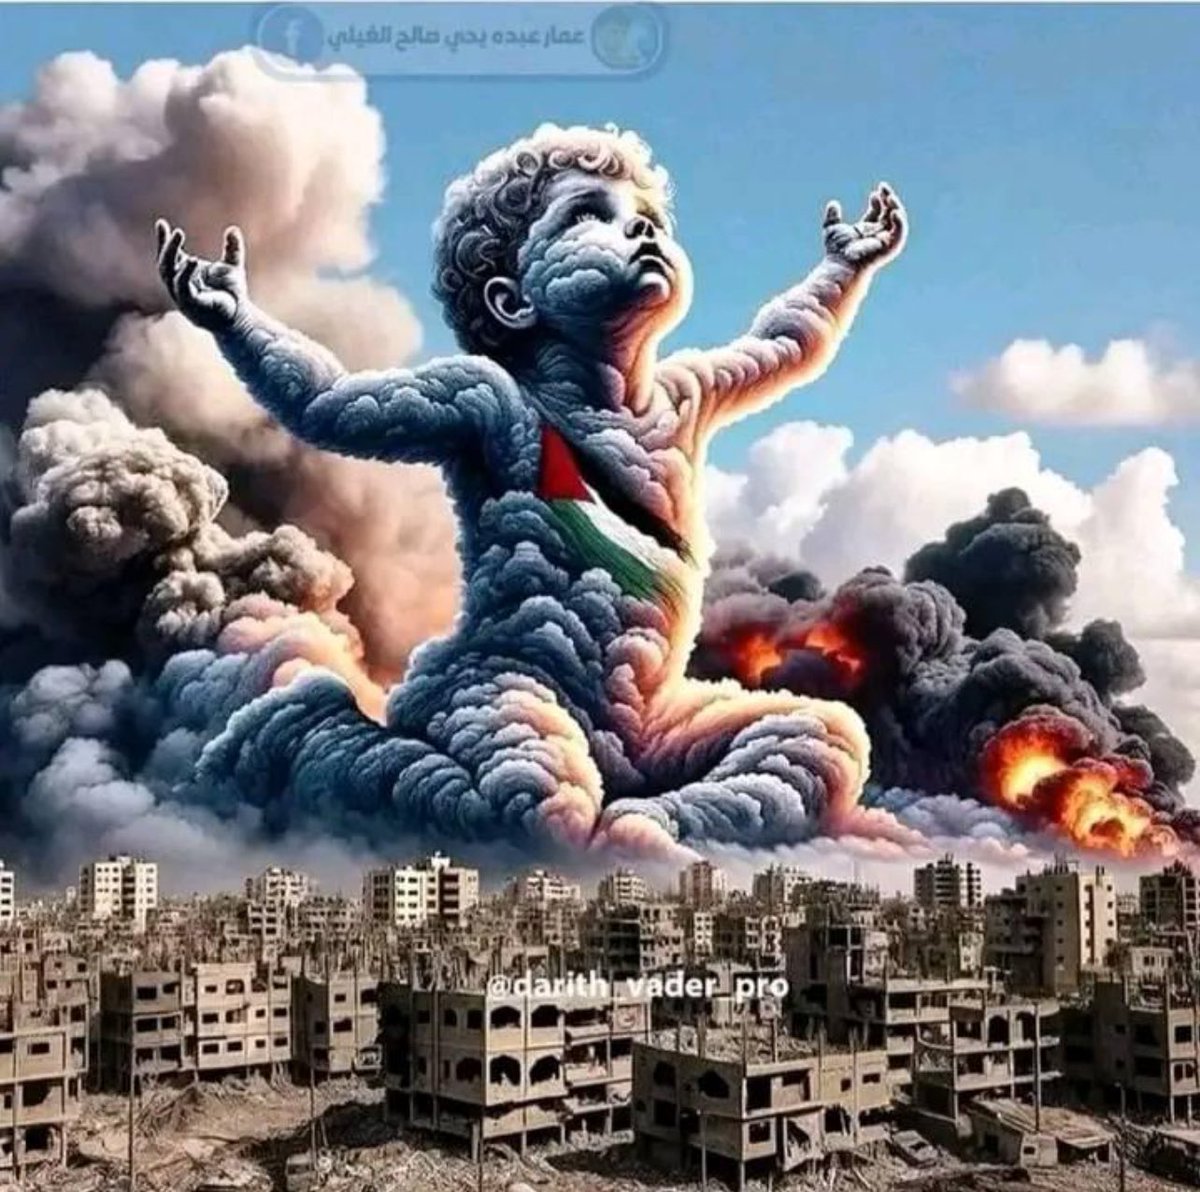 #Saveghazachildren #Savephalastine #Stopgenocideinghaza
یااللّٰہ آج عید کے دن کی برکت سے تو فلسطینیوں کے حال پر رحم فرما۔